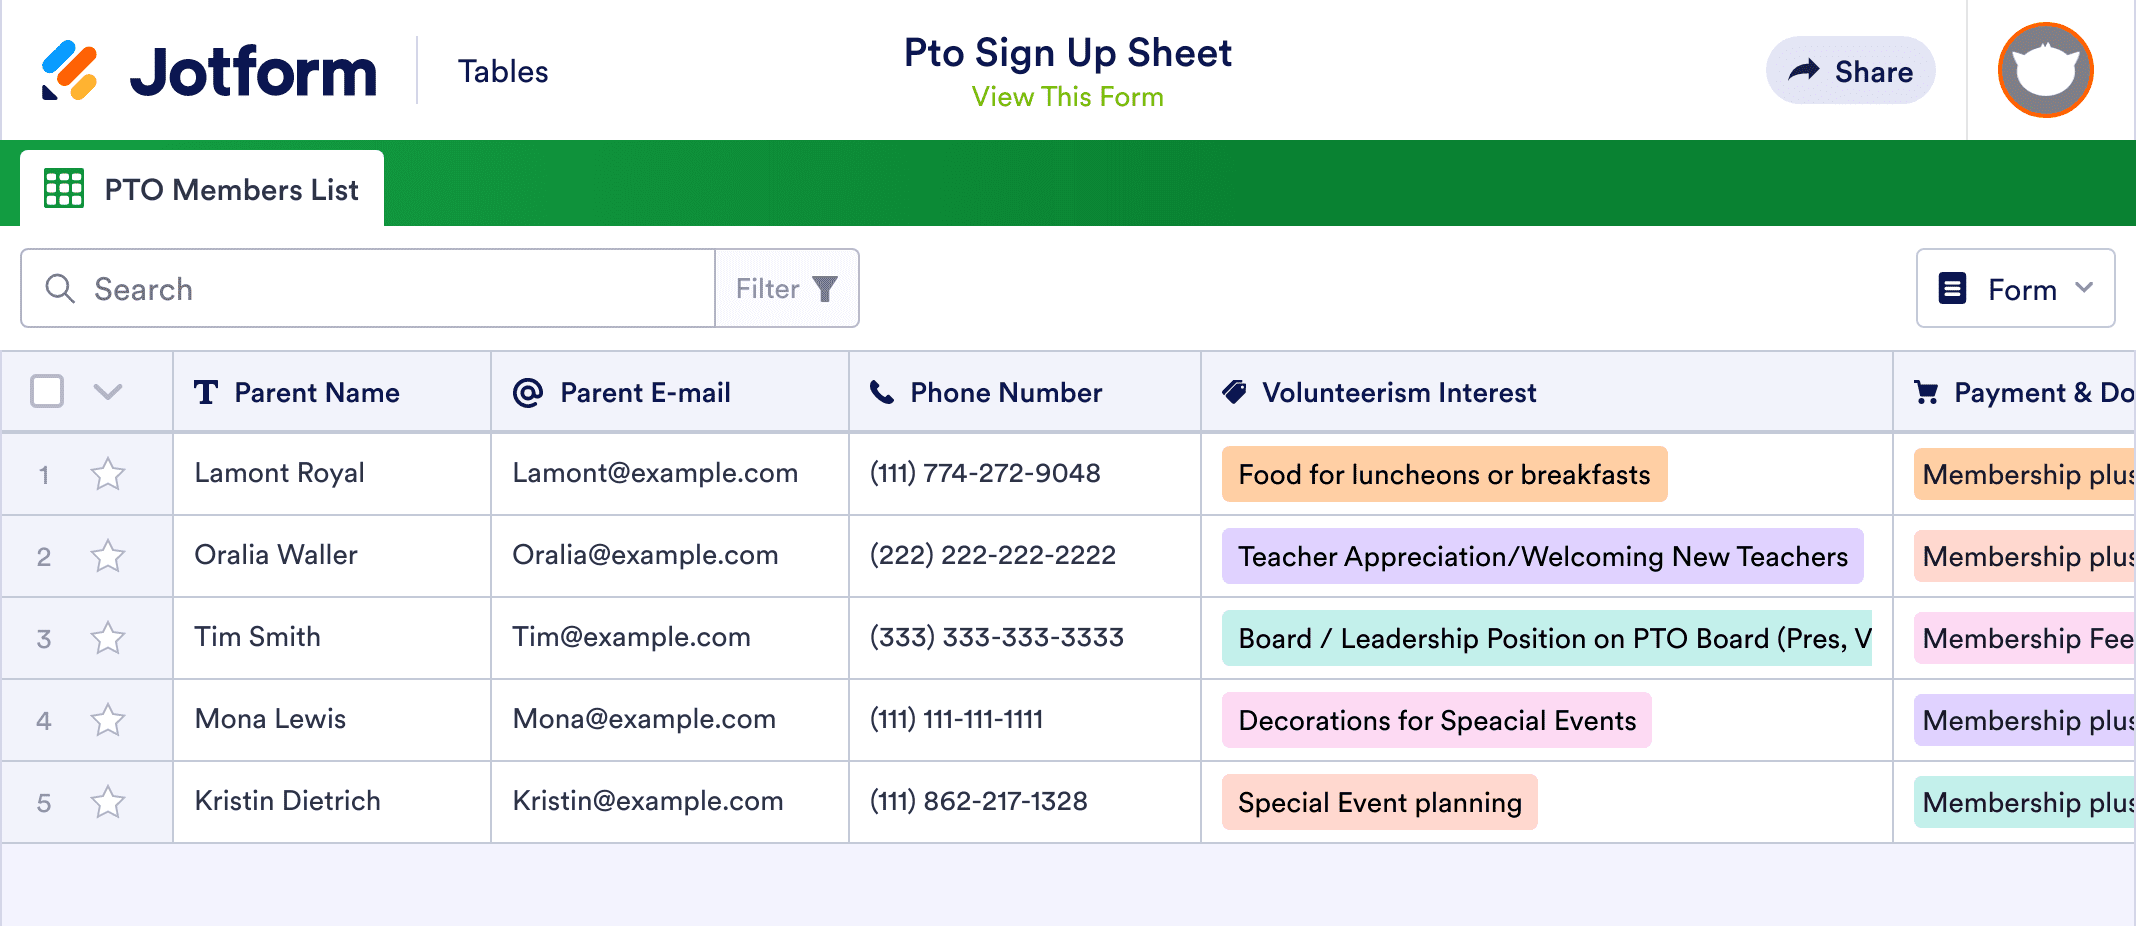 Pto Sign Up Sheet